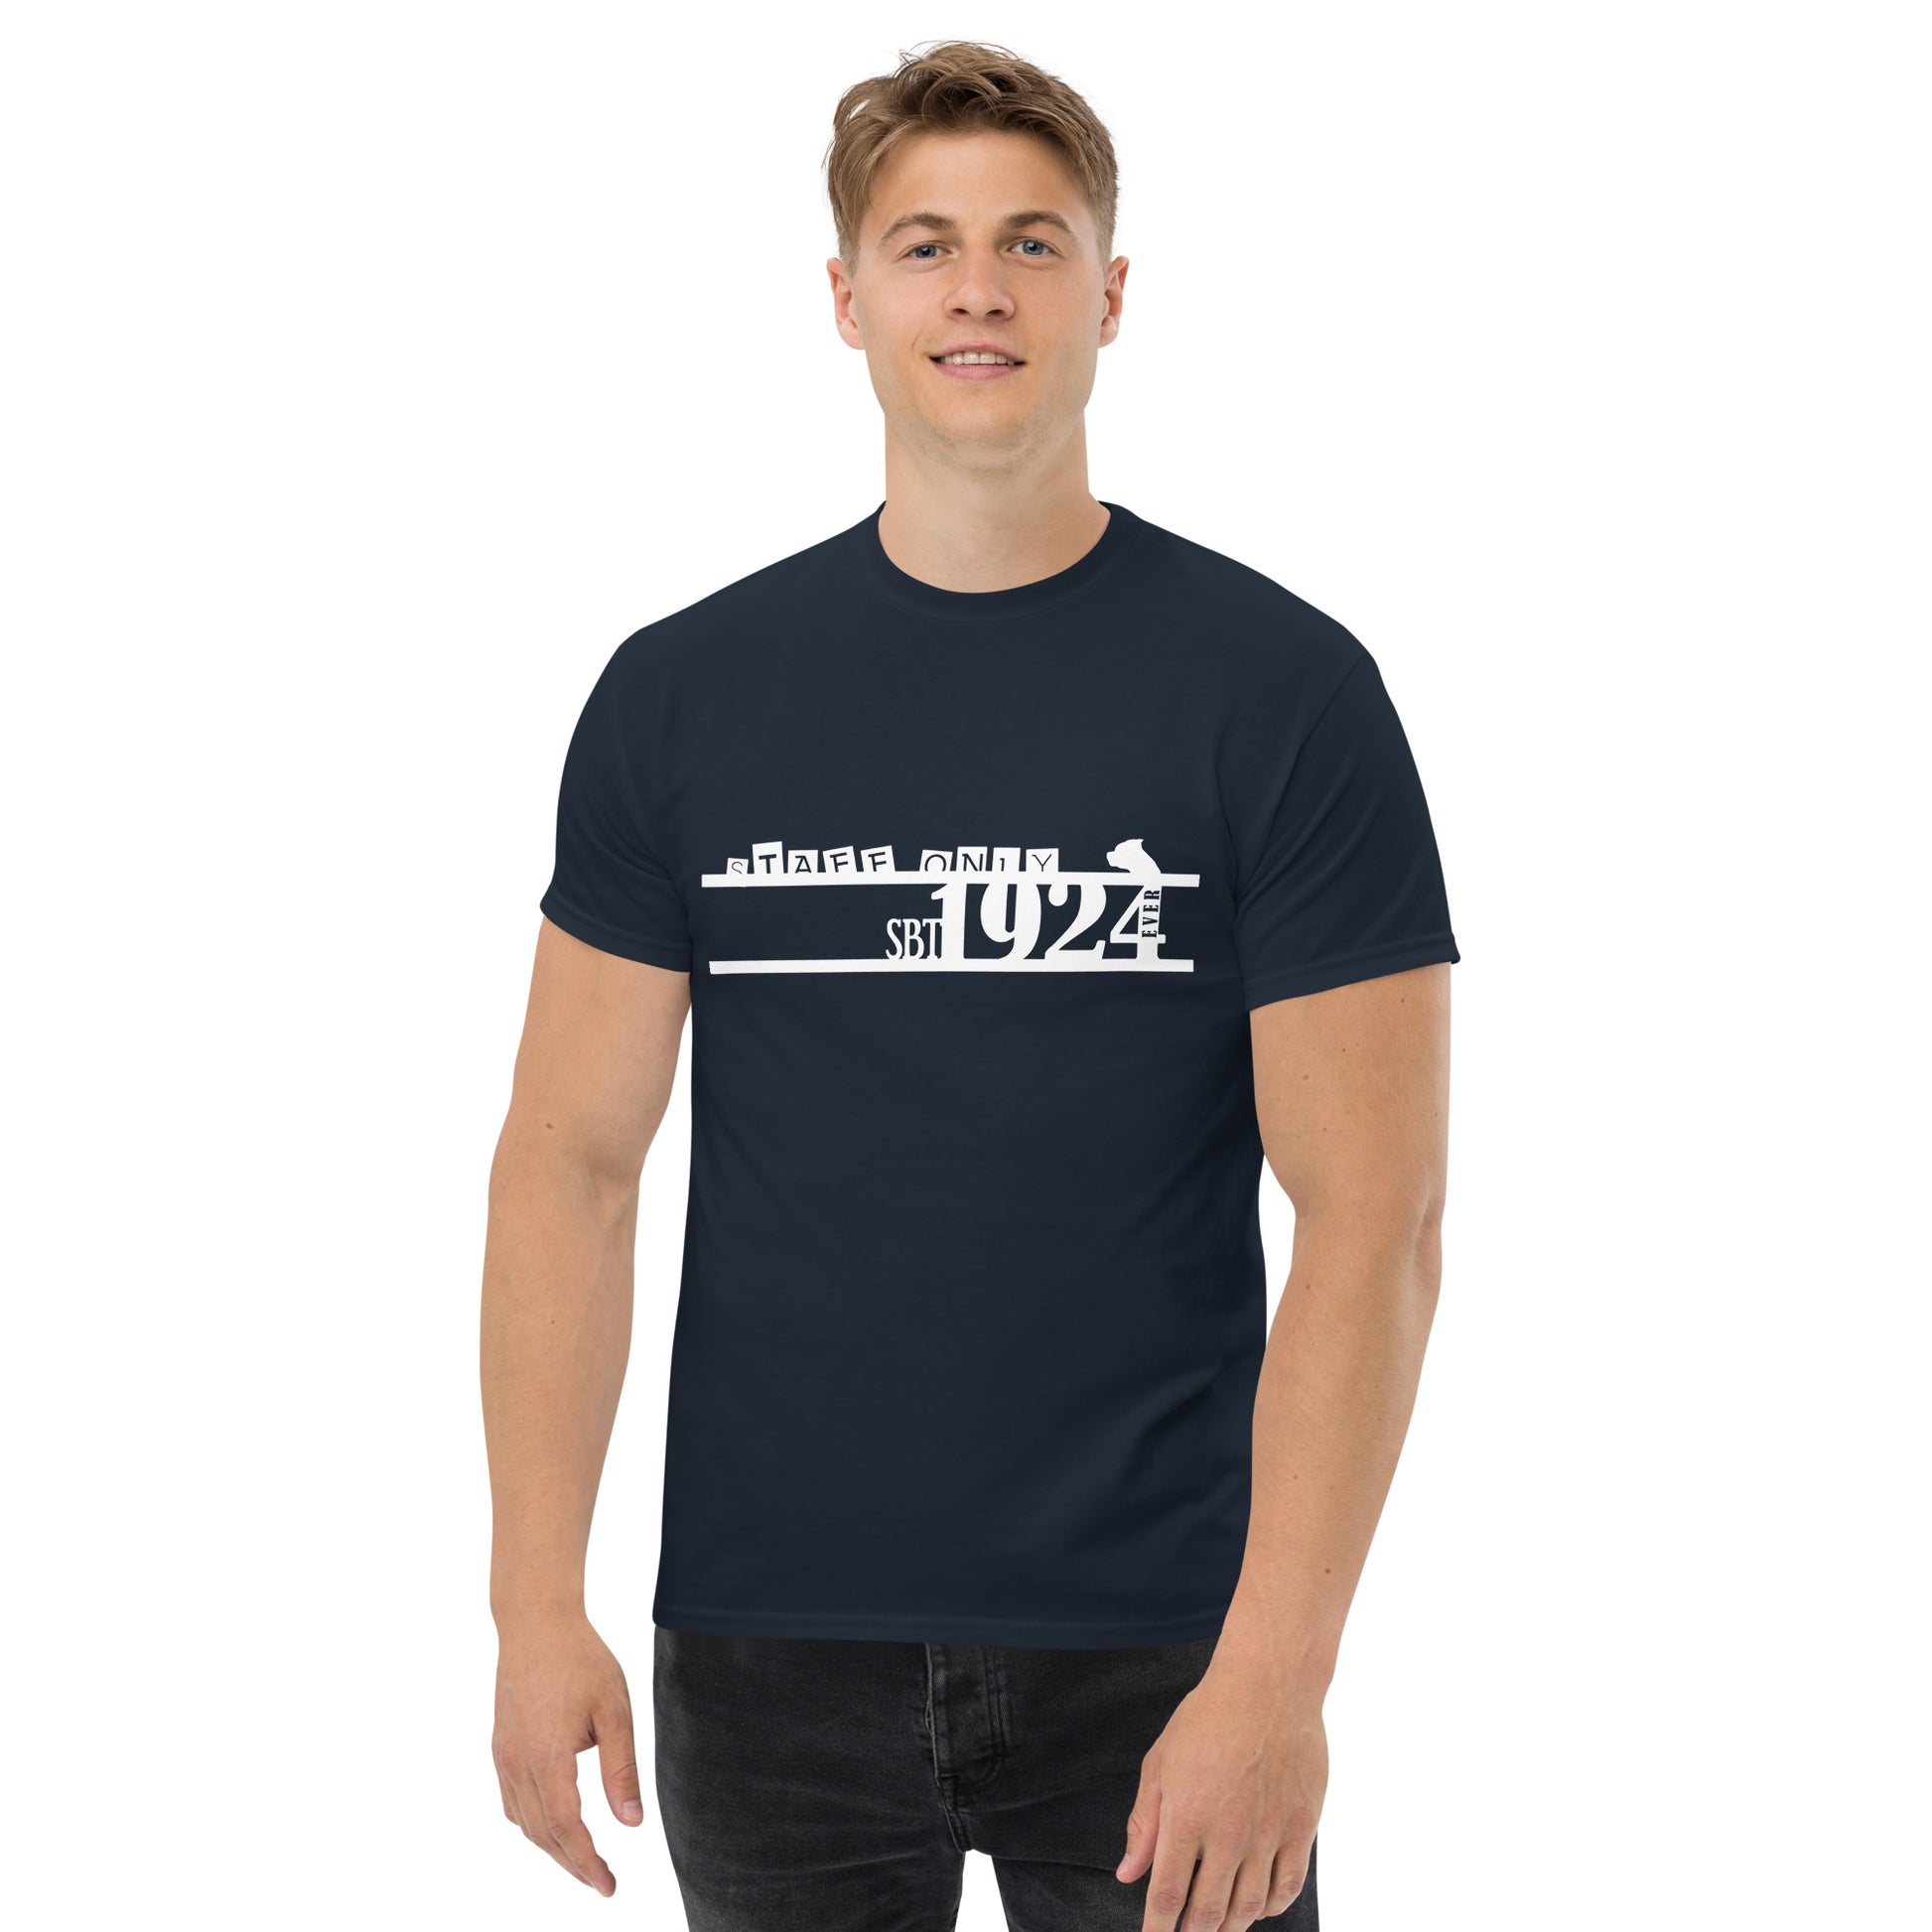 "SBT 1924" Klassisches Herren-T-Shirt - Staffordshire Bullterrier - dunkelblau